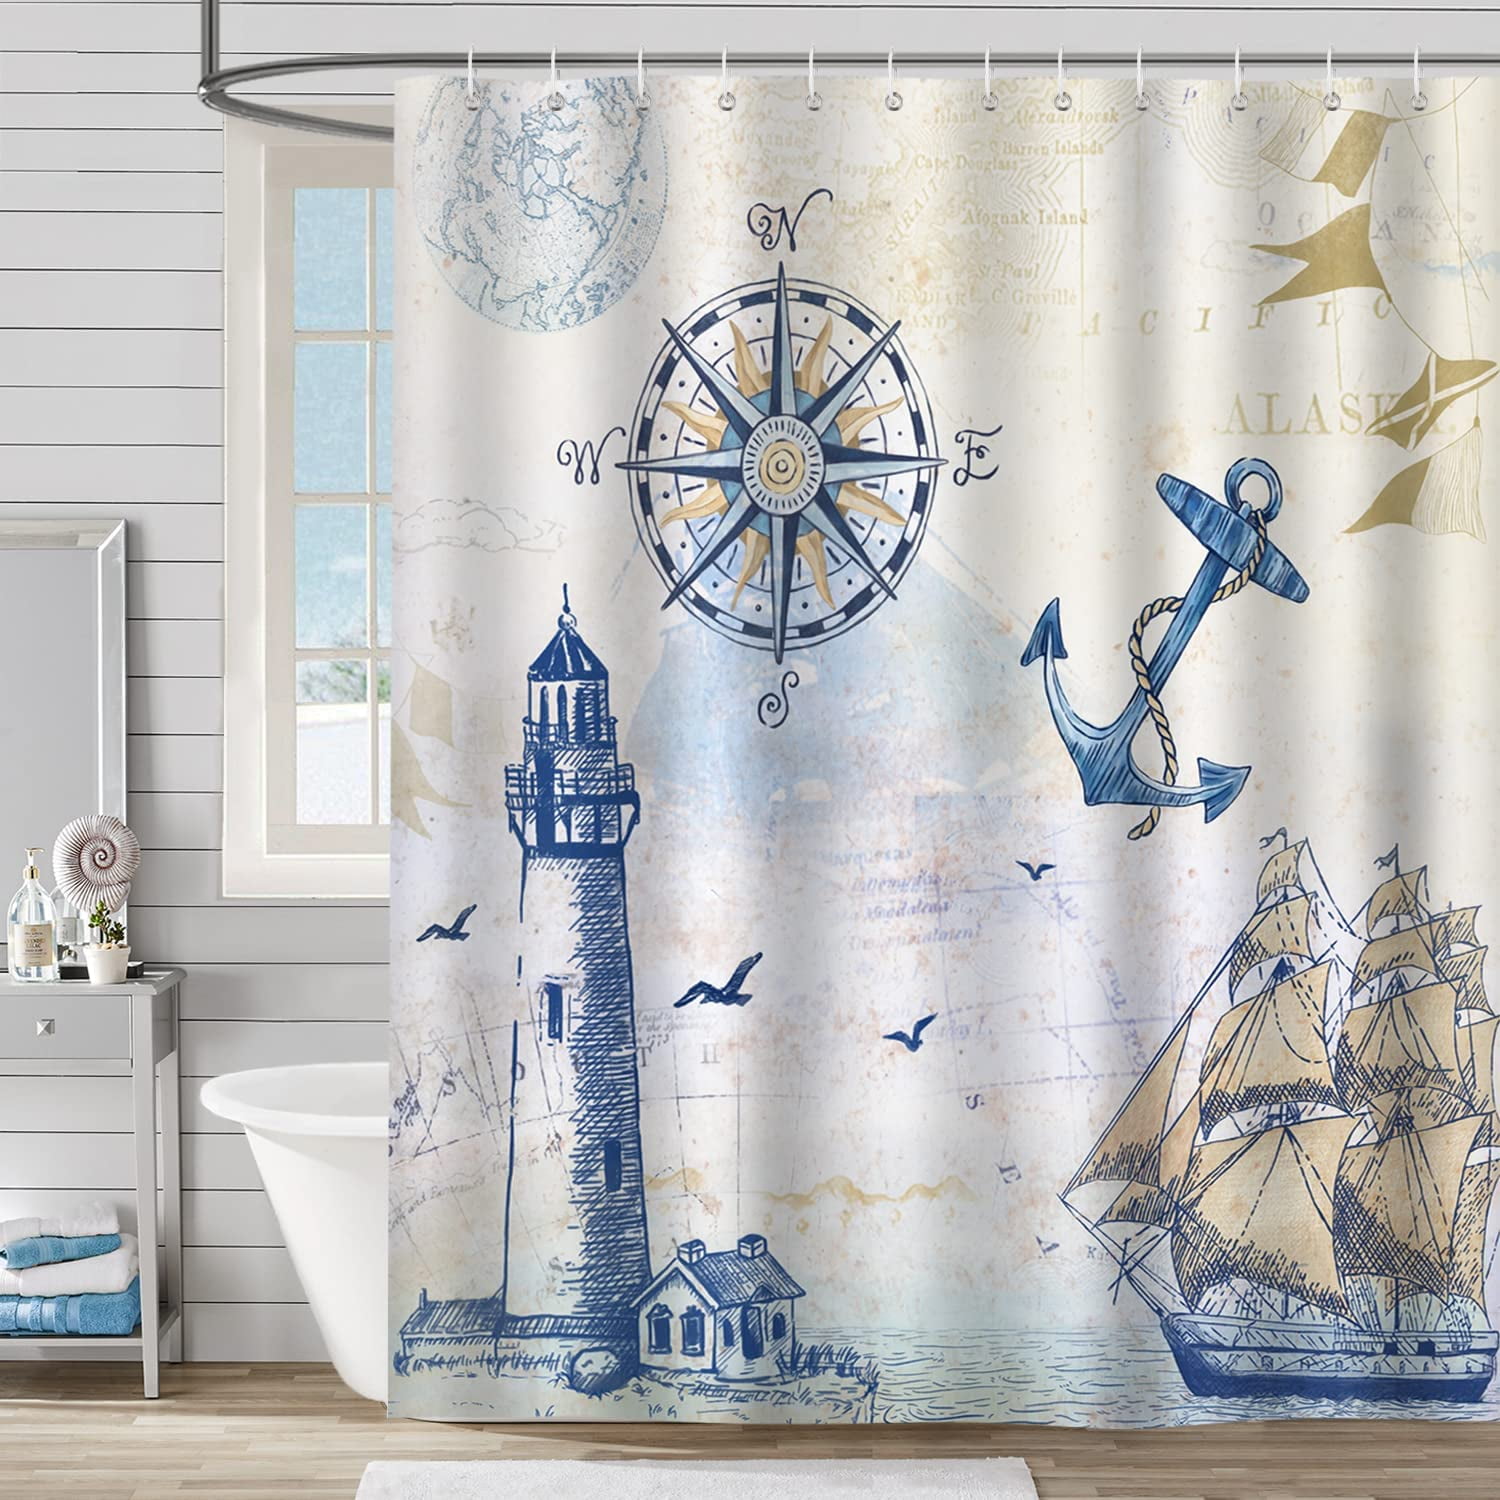 Hand painted anchor Shower Curtain Bathroom Decor Waterproof Fabric & 12Hooks 